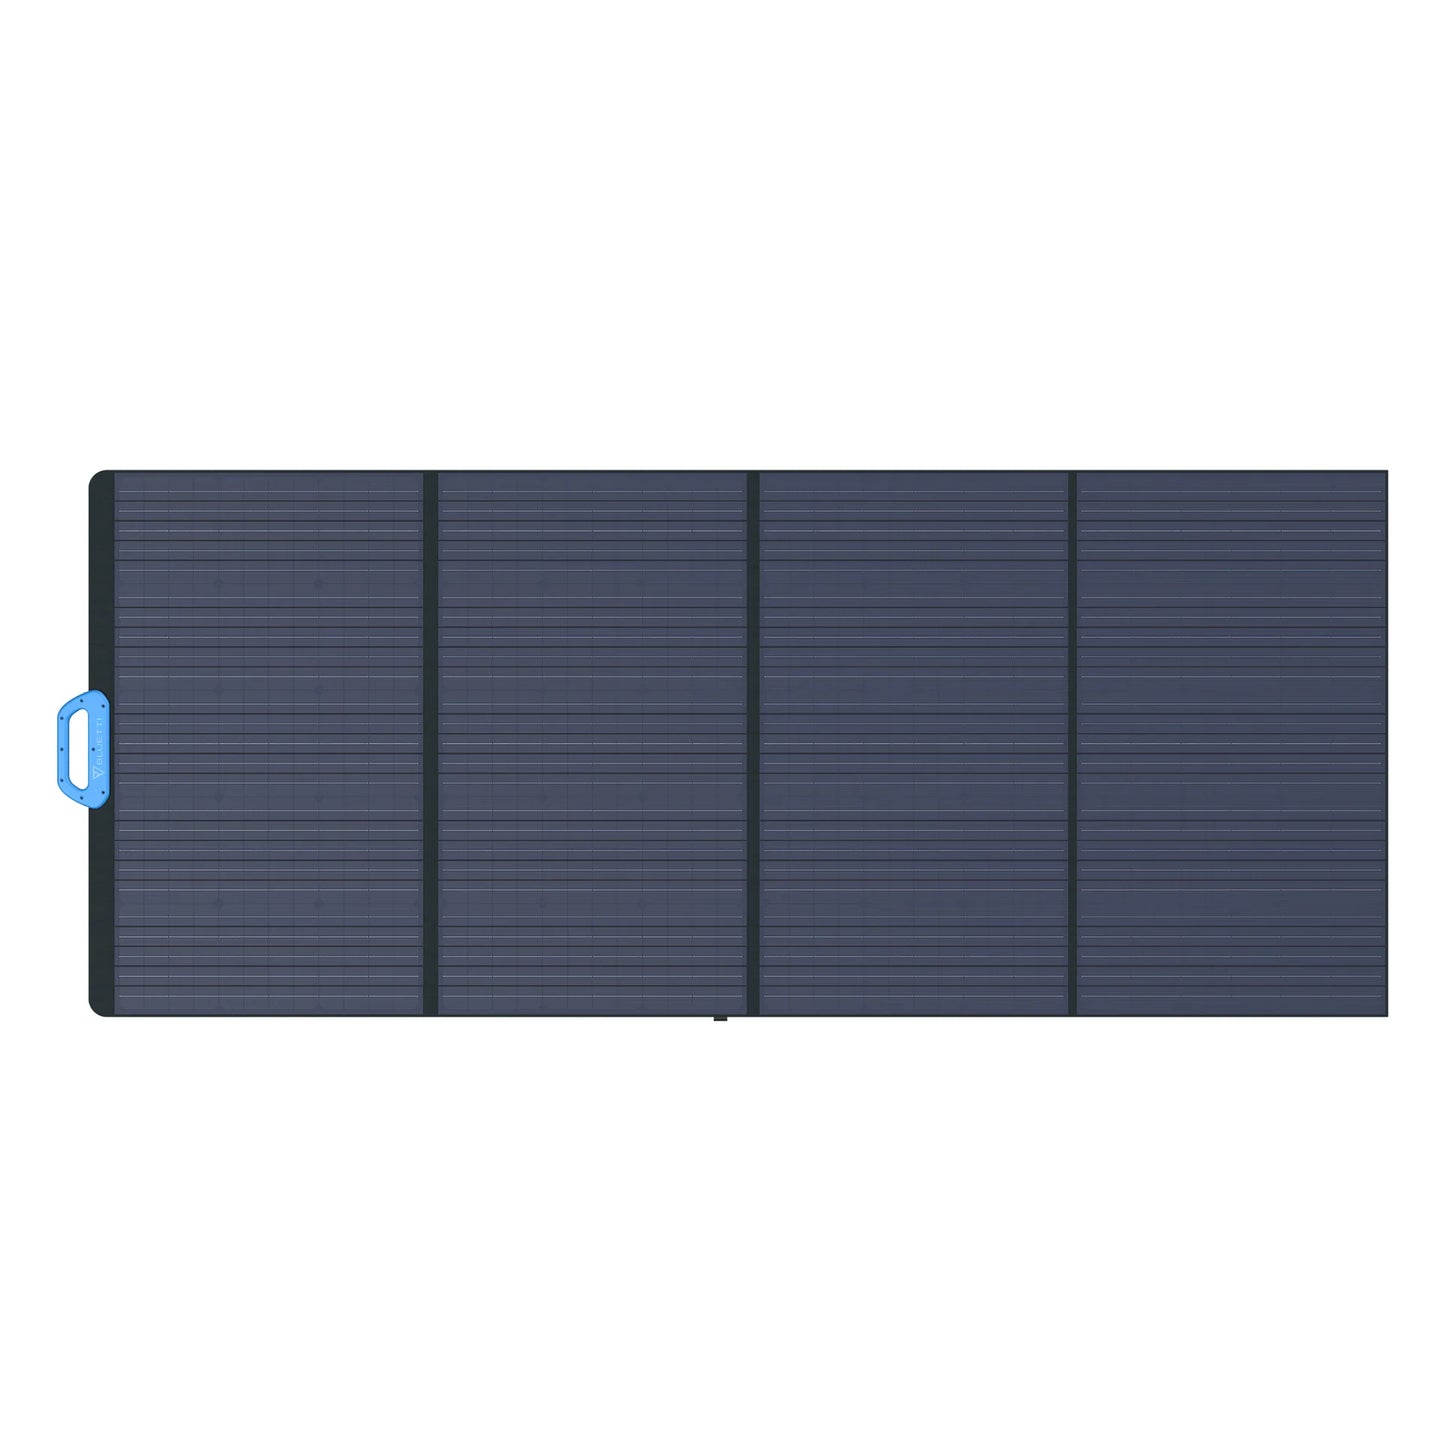 BLUETTI PV350 Solar Panel | 350W (Free Shipping)